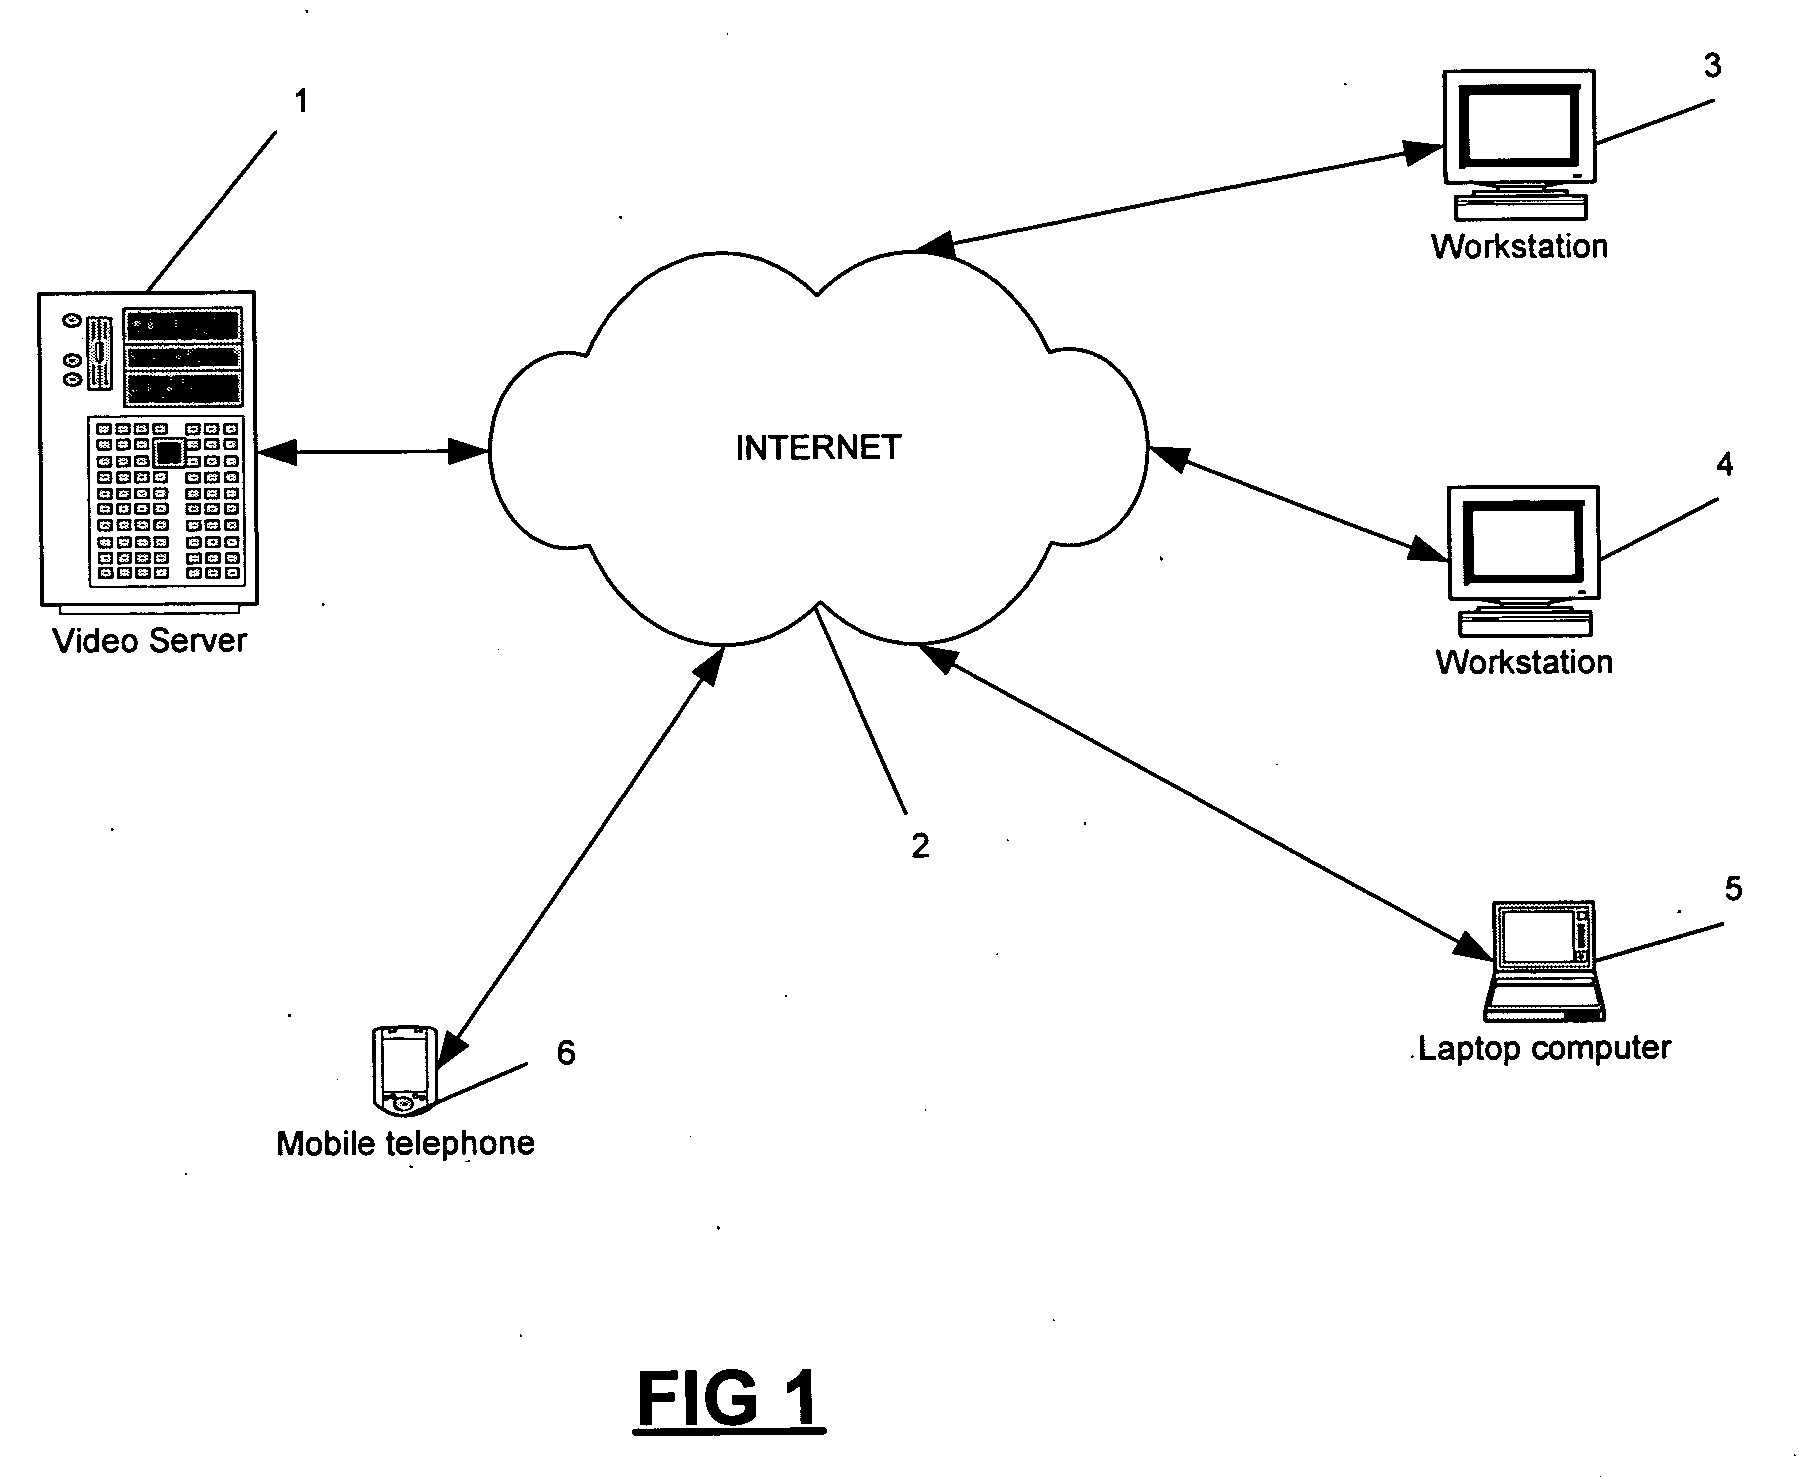 Distribution of video data